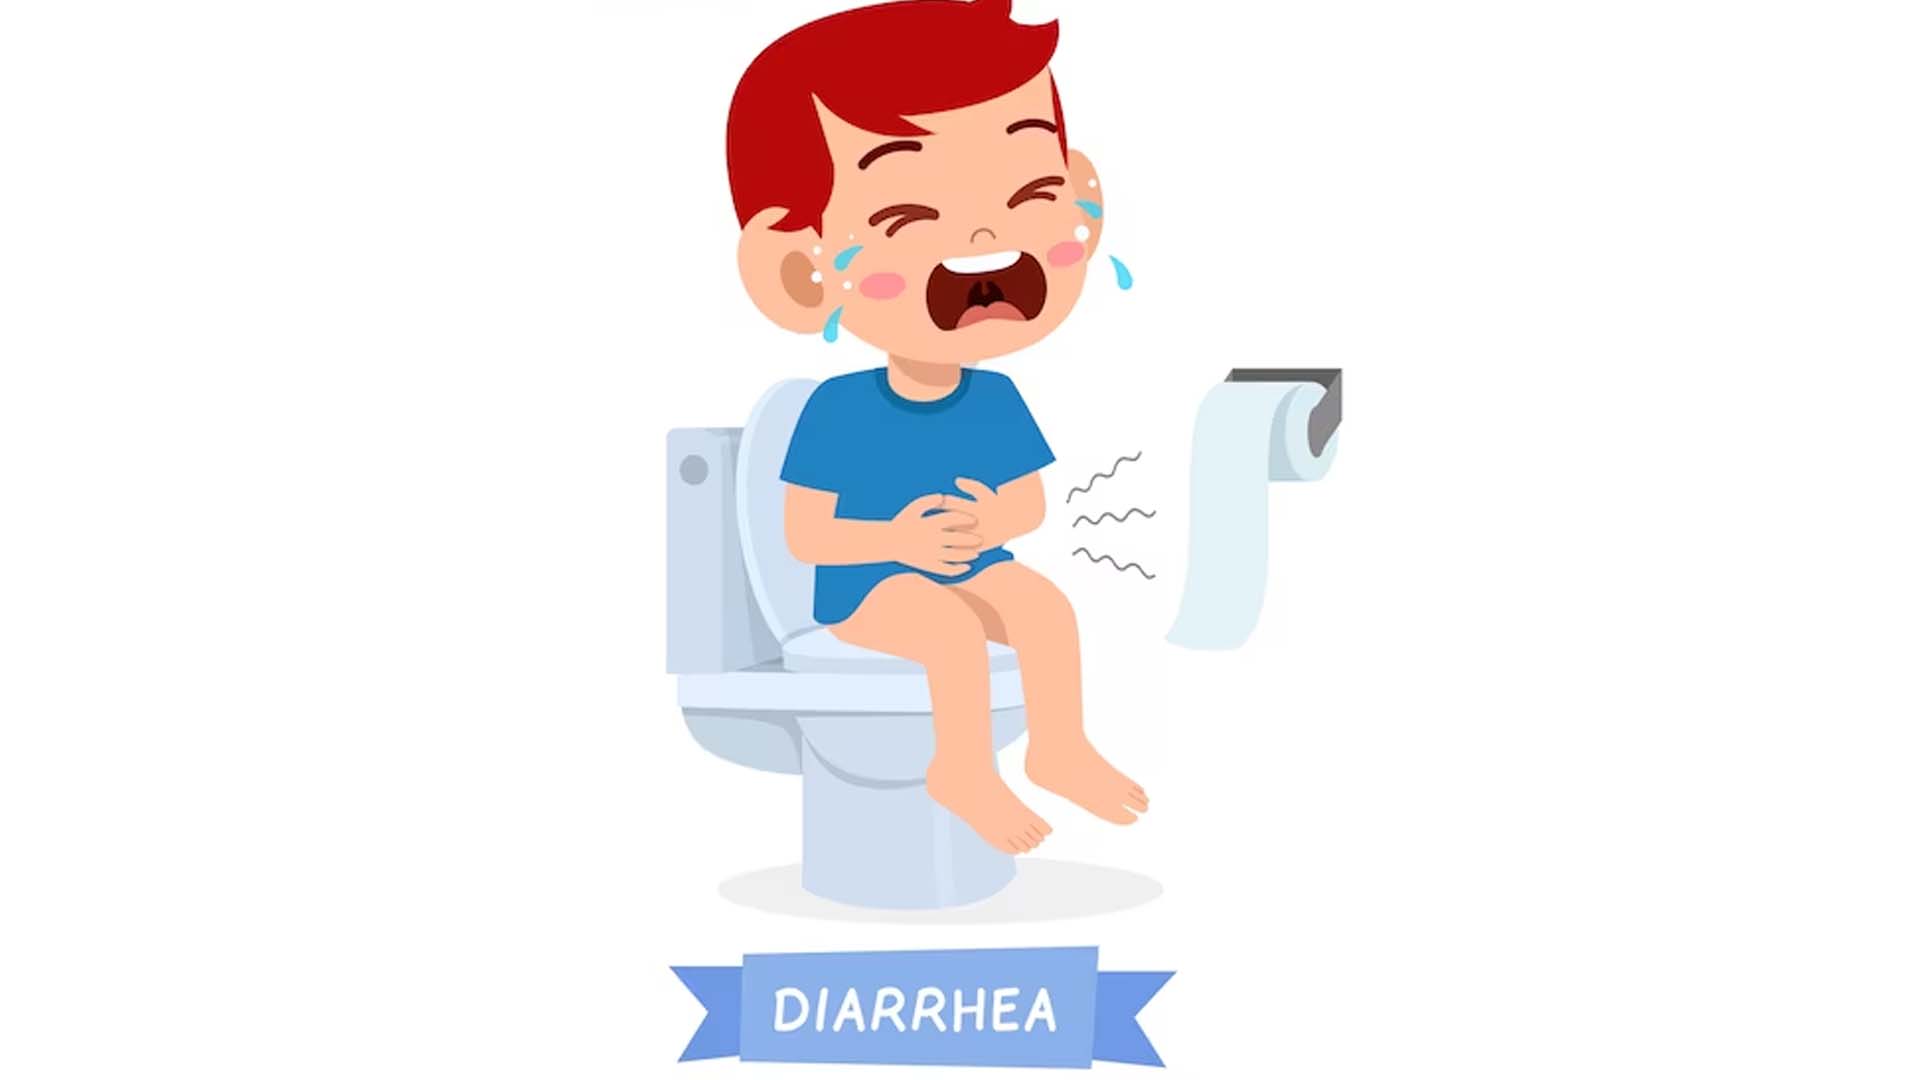 Kid Crying with Diarrhea